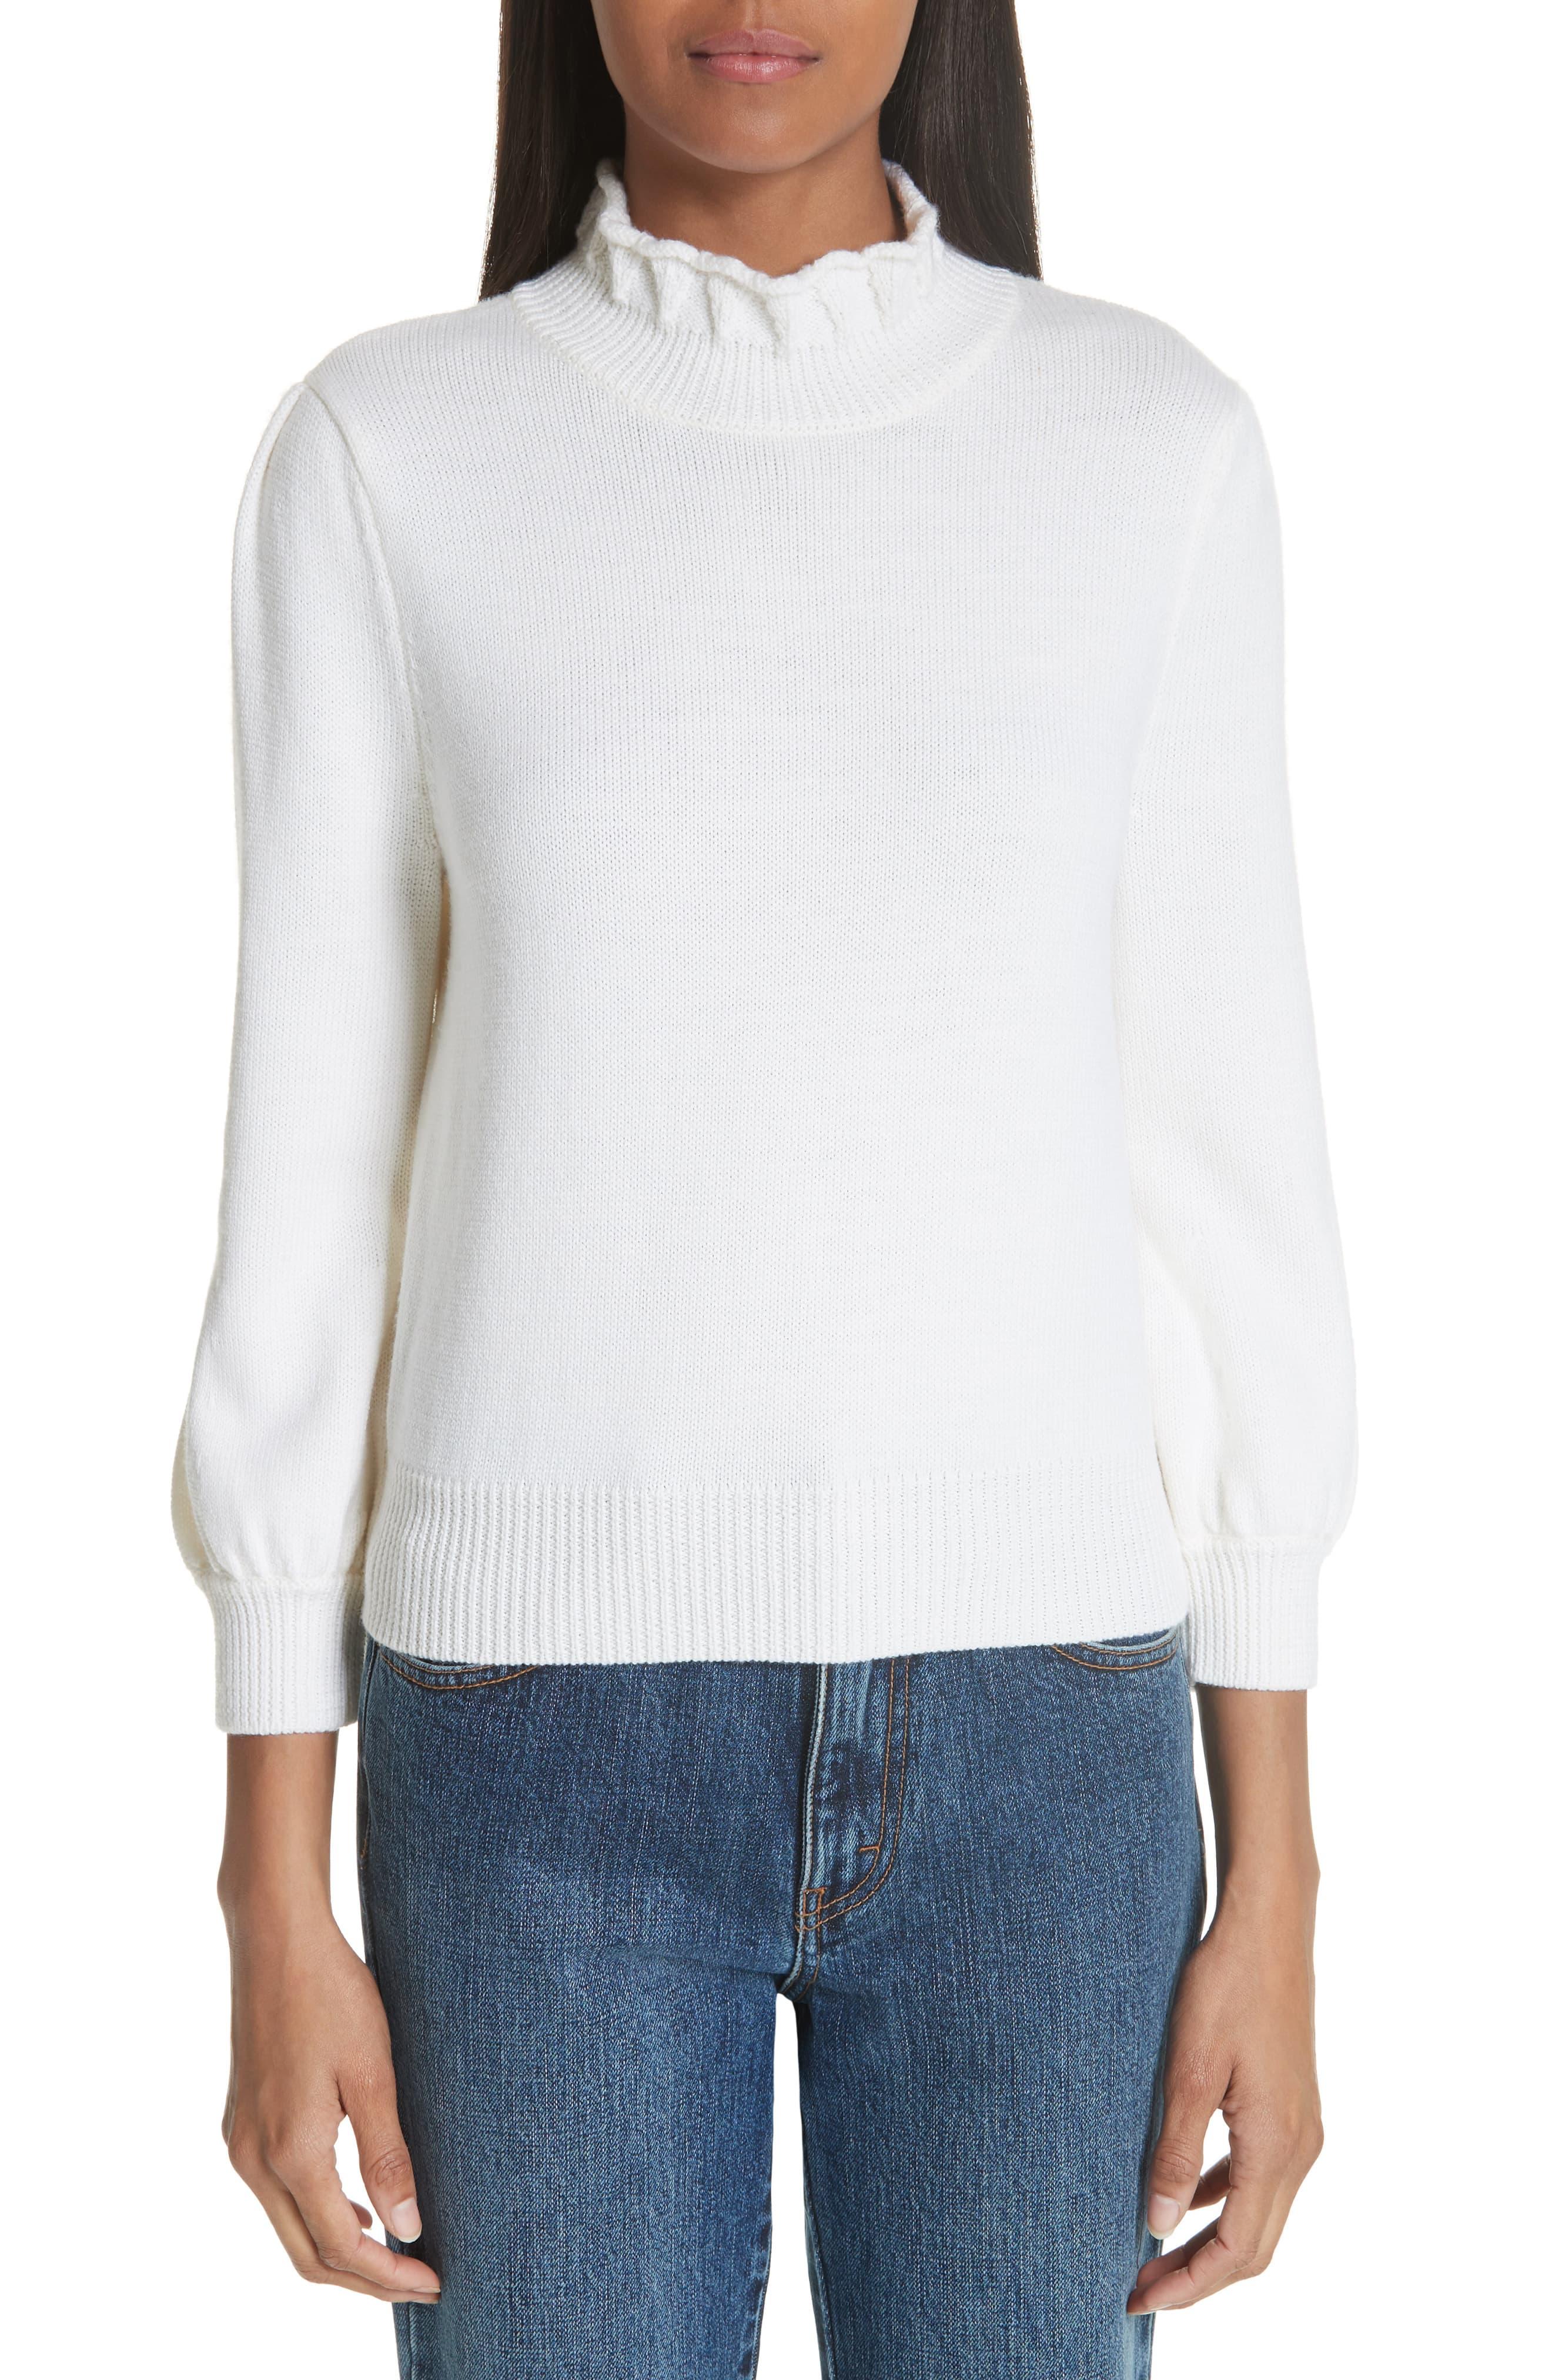 Co. Essentials High Llar Wool Sweater in Ivory (White) - Lyst